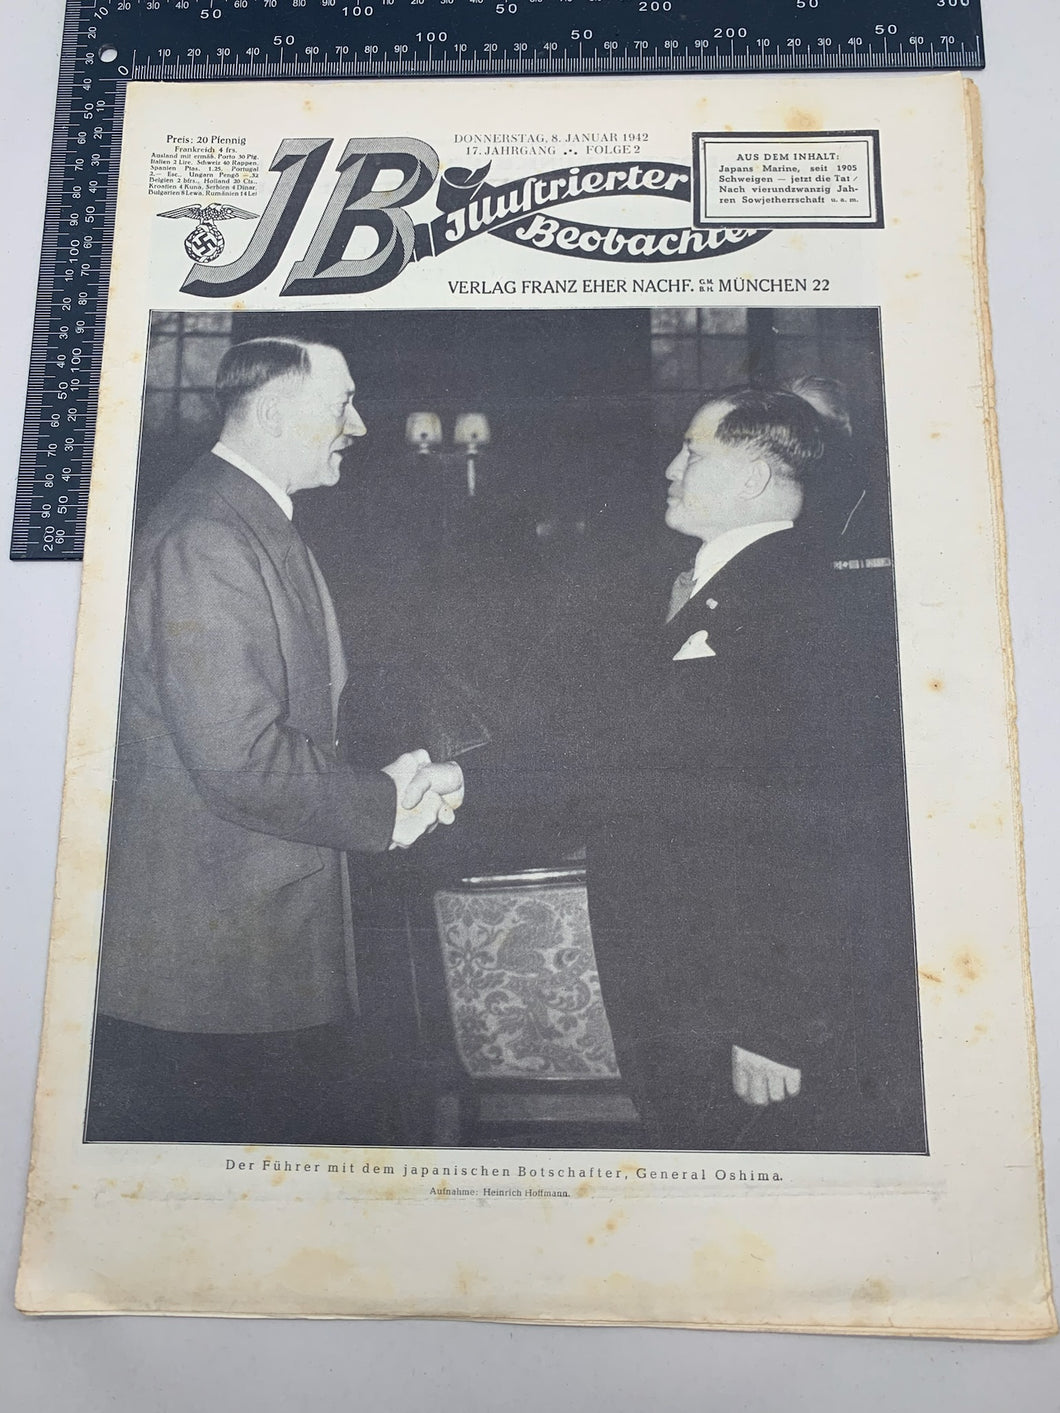 JB Juustrierter Beobachter NSDAP Magazine Original WW2 German - 8th January 1942